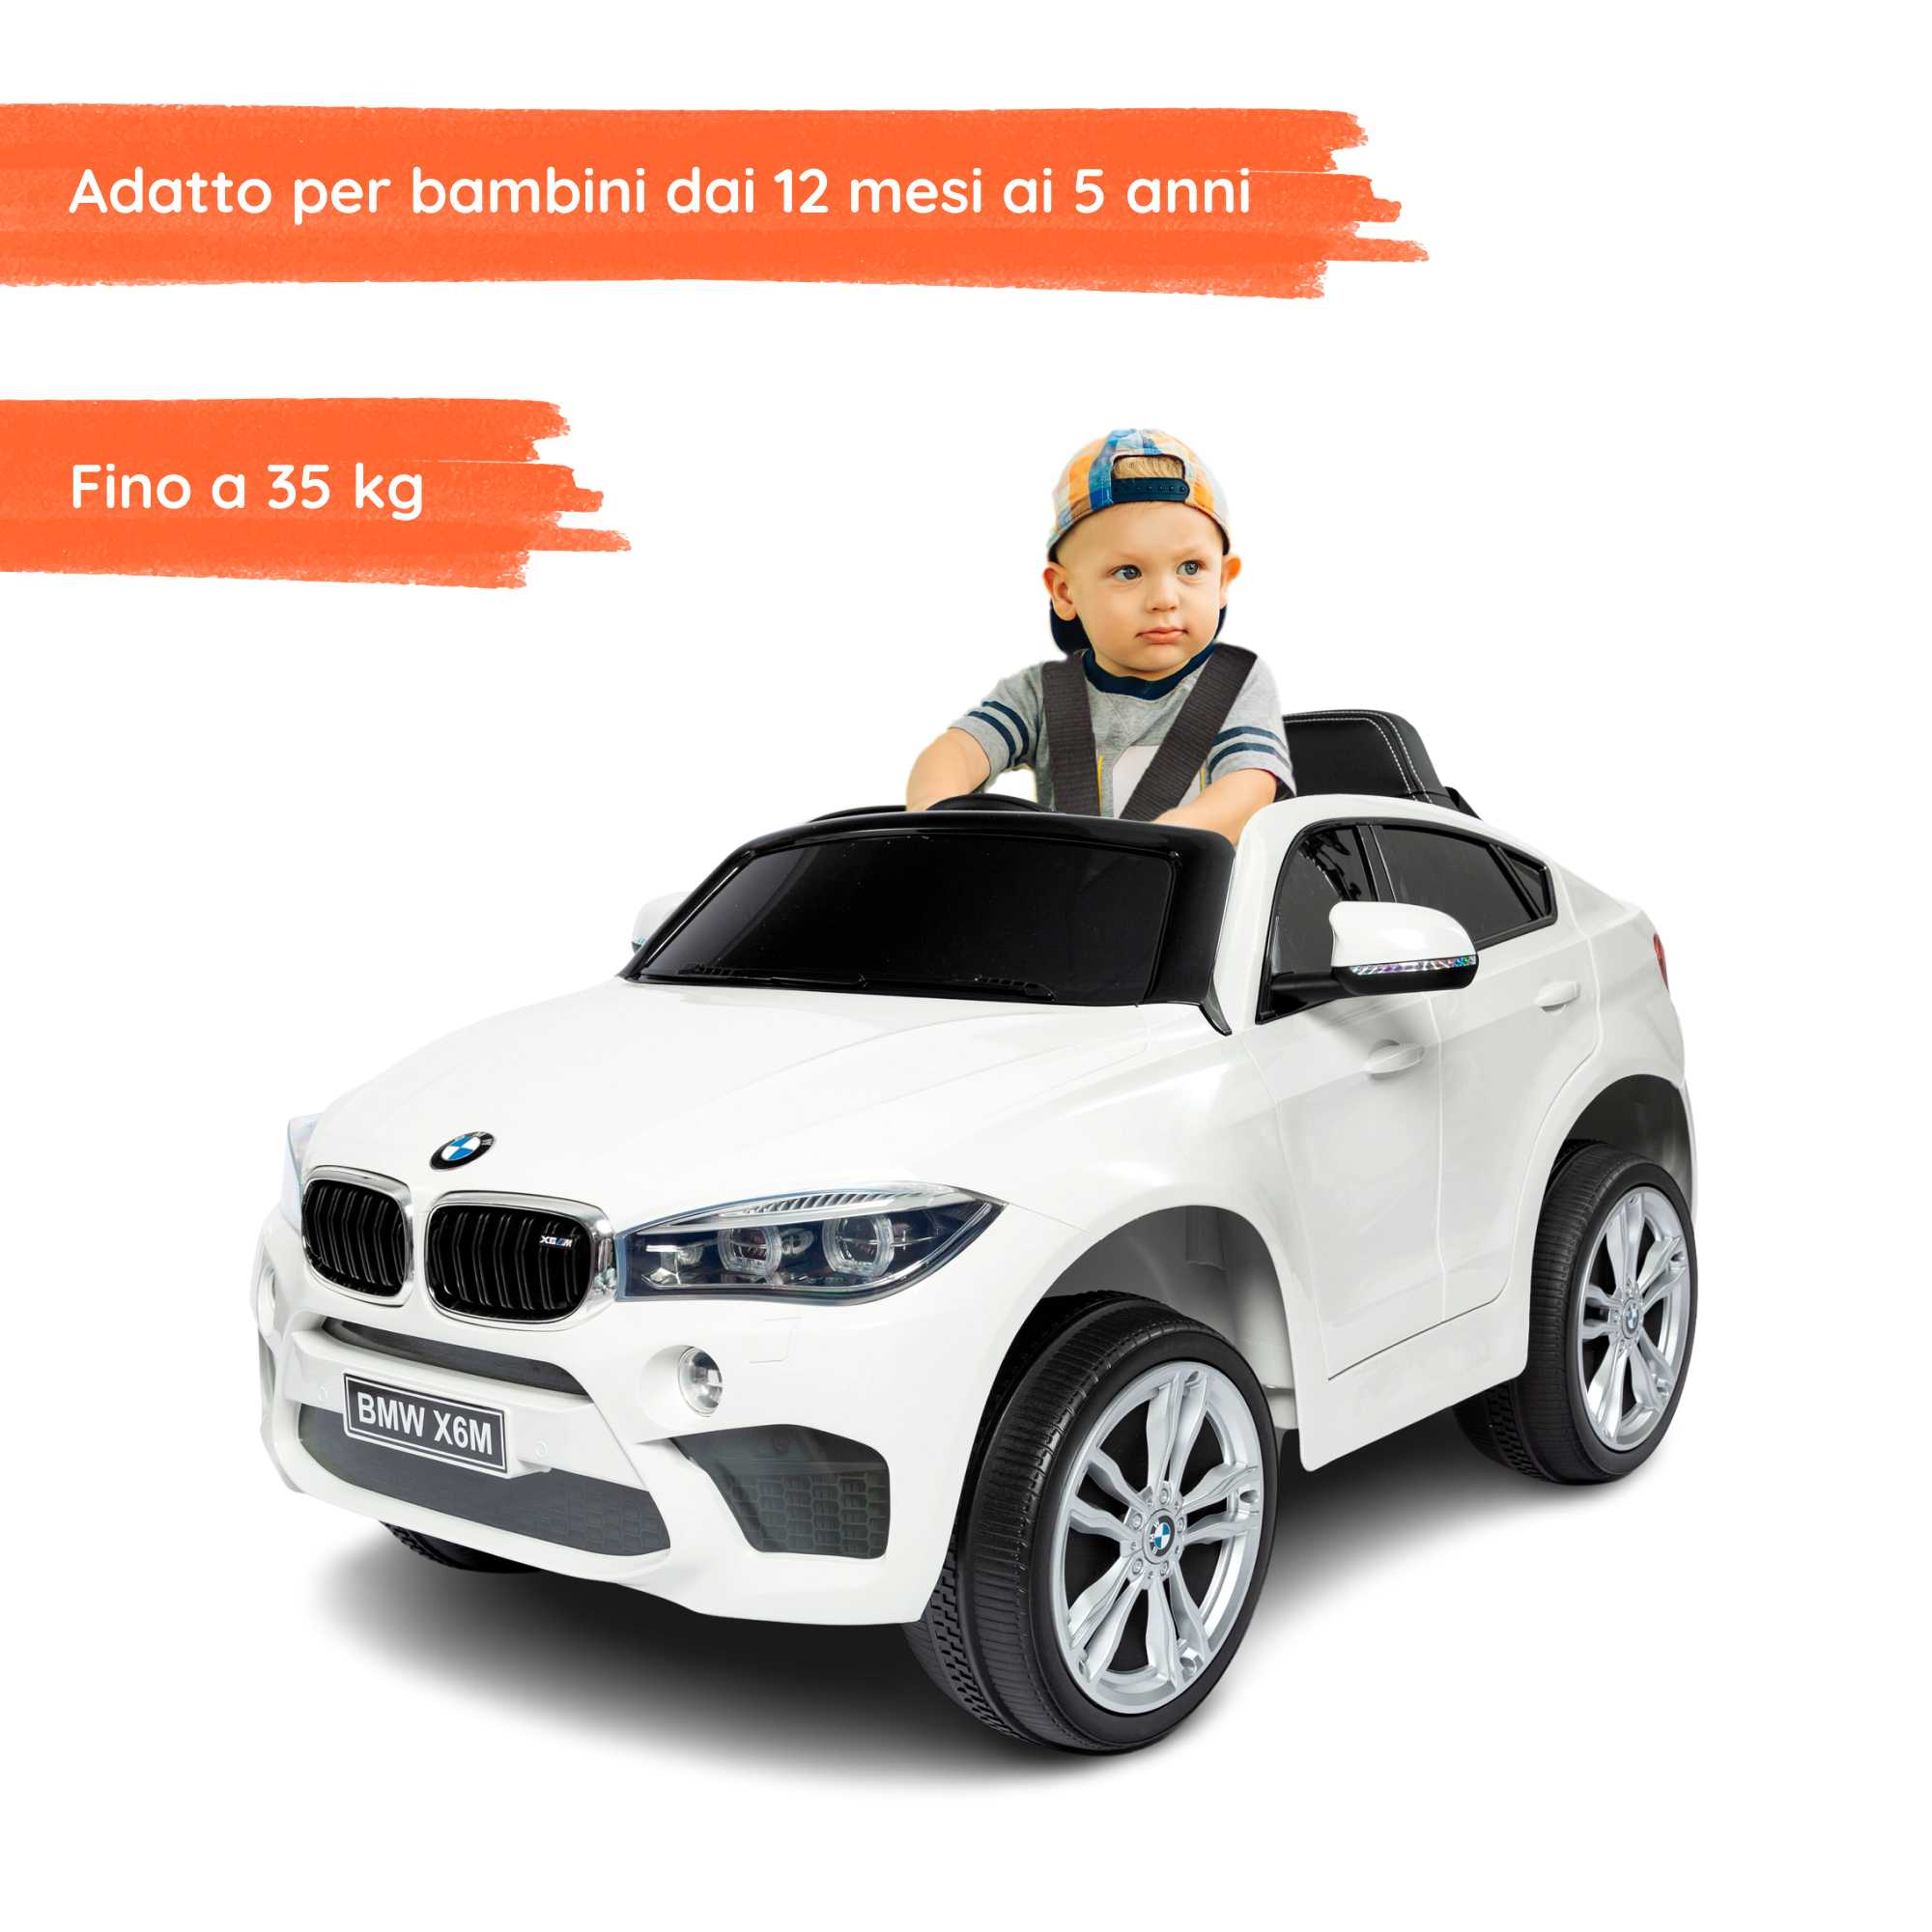 BMW X6 M bianca con bambino 